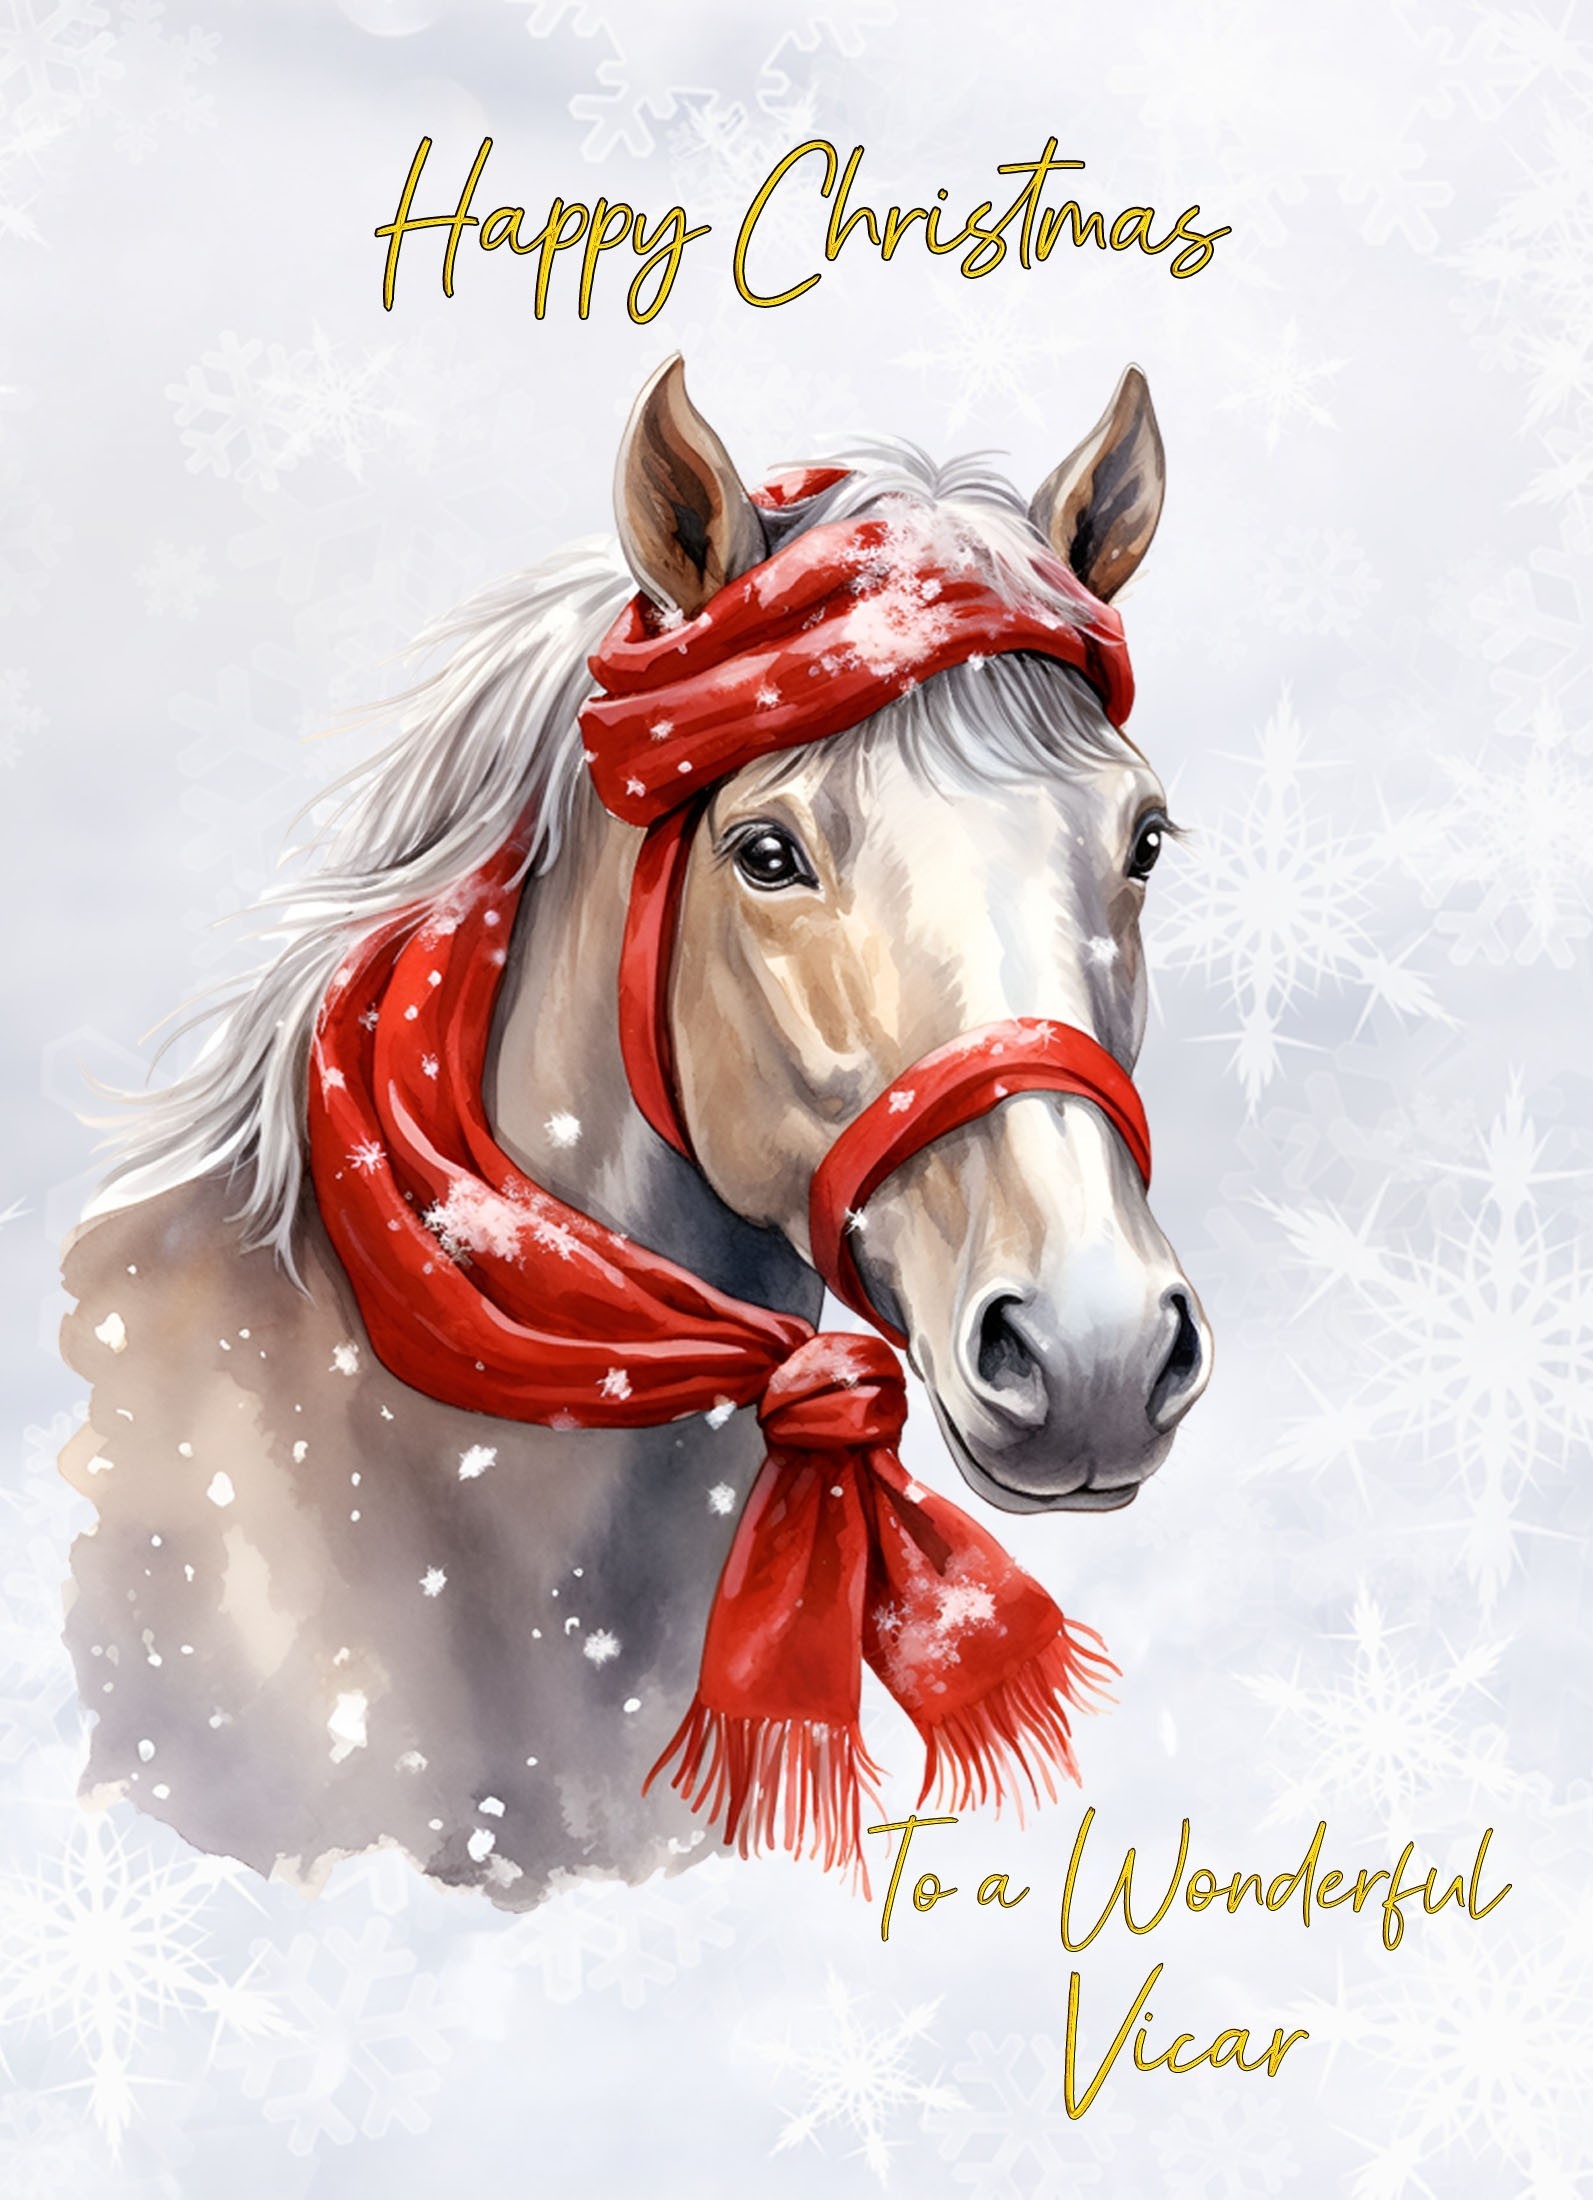 Christmas Card For Vicar (Horse Art Red)